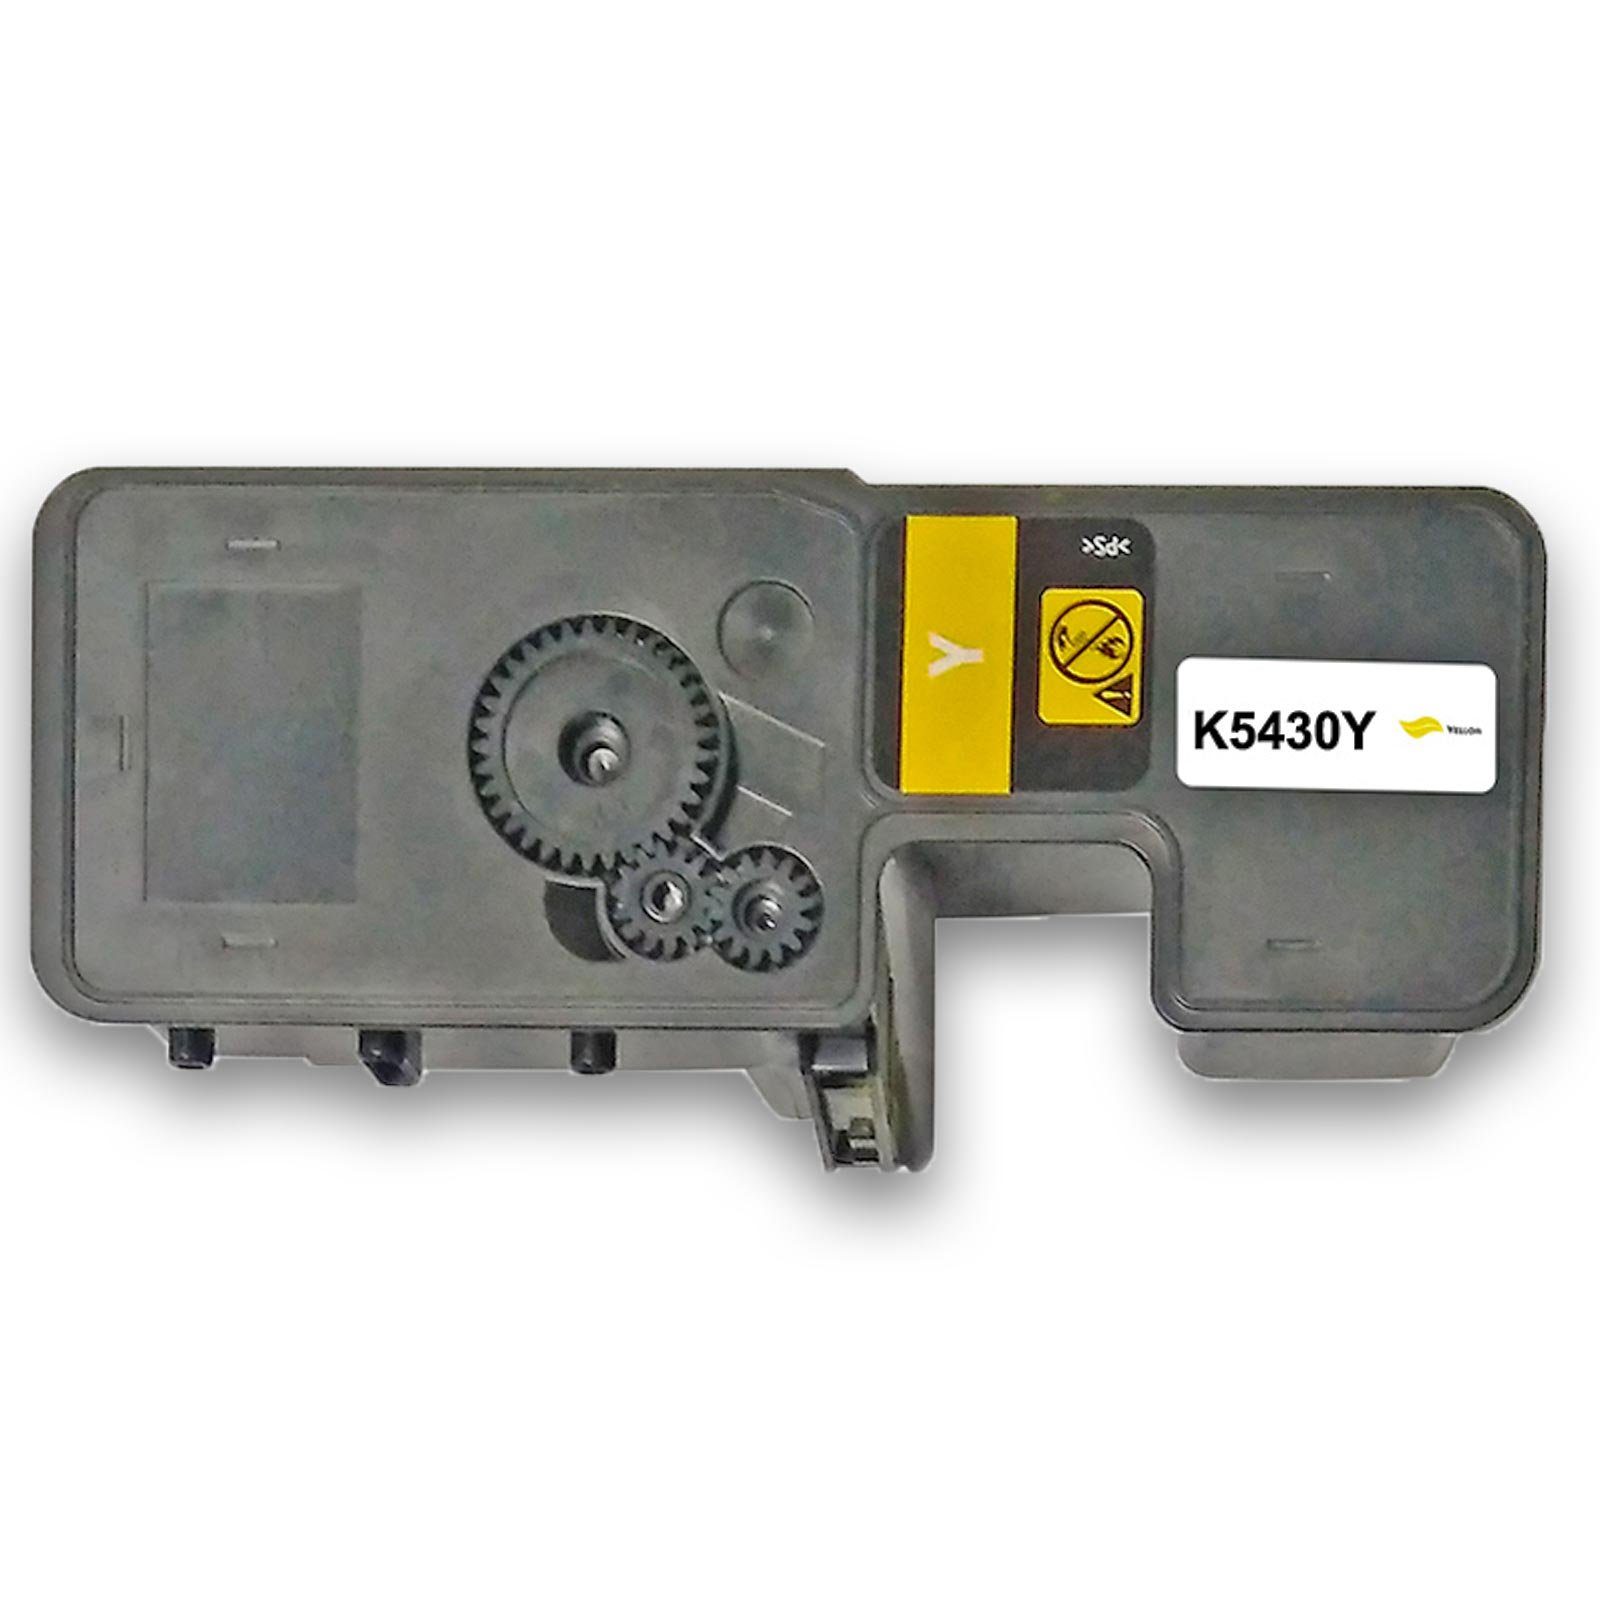 Tonerkartusche Gigao TK-5430Y 1x TK-5430Y kompatibel Kyocera Lieferumfang: Gelb, Kyocera zu Tonerkassette Kompatibel